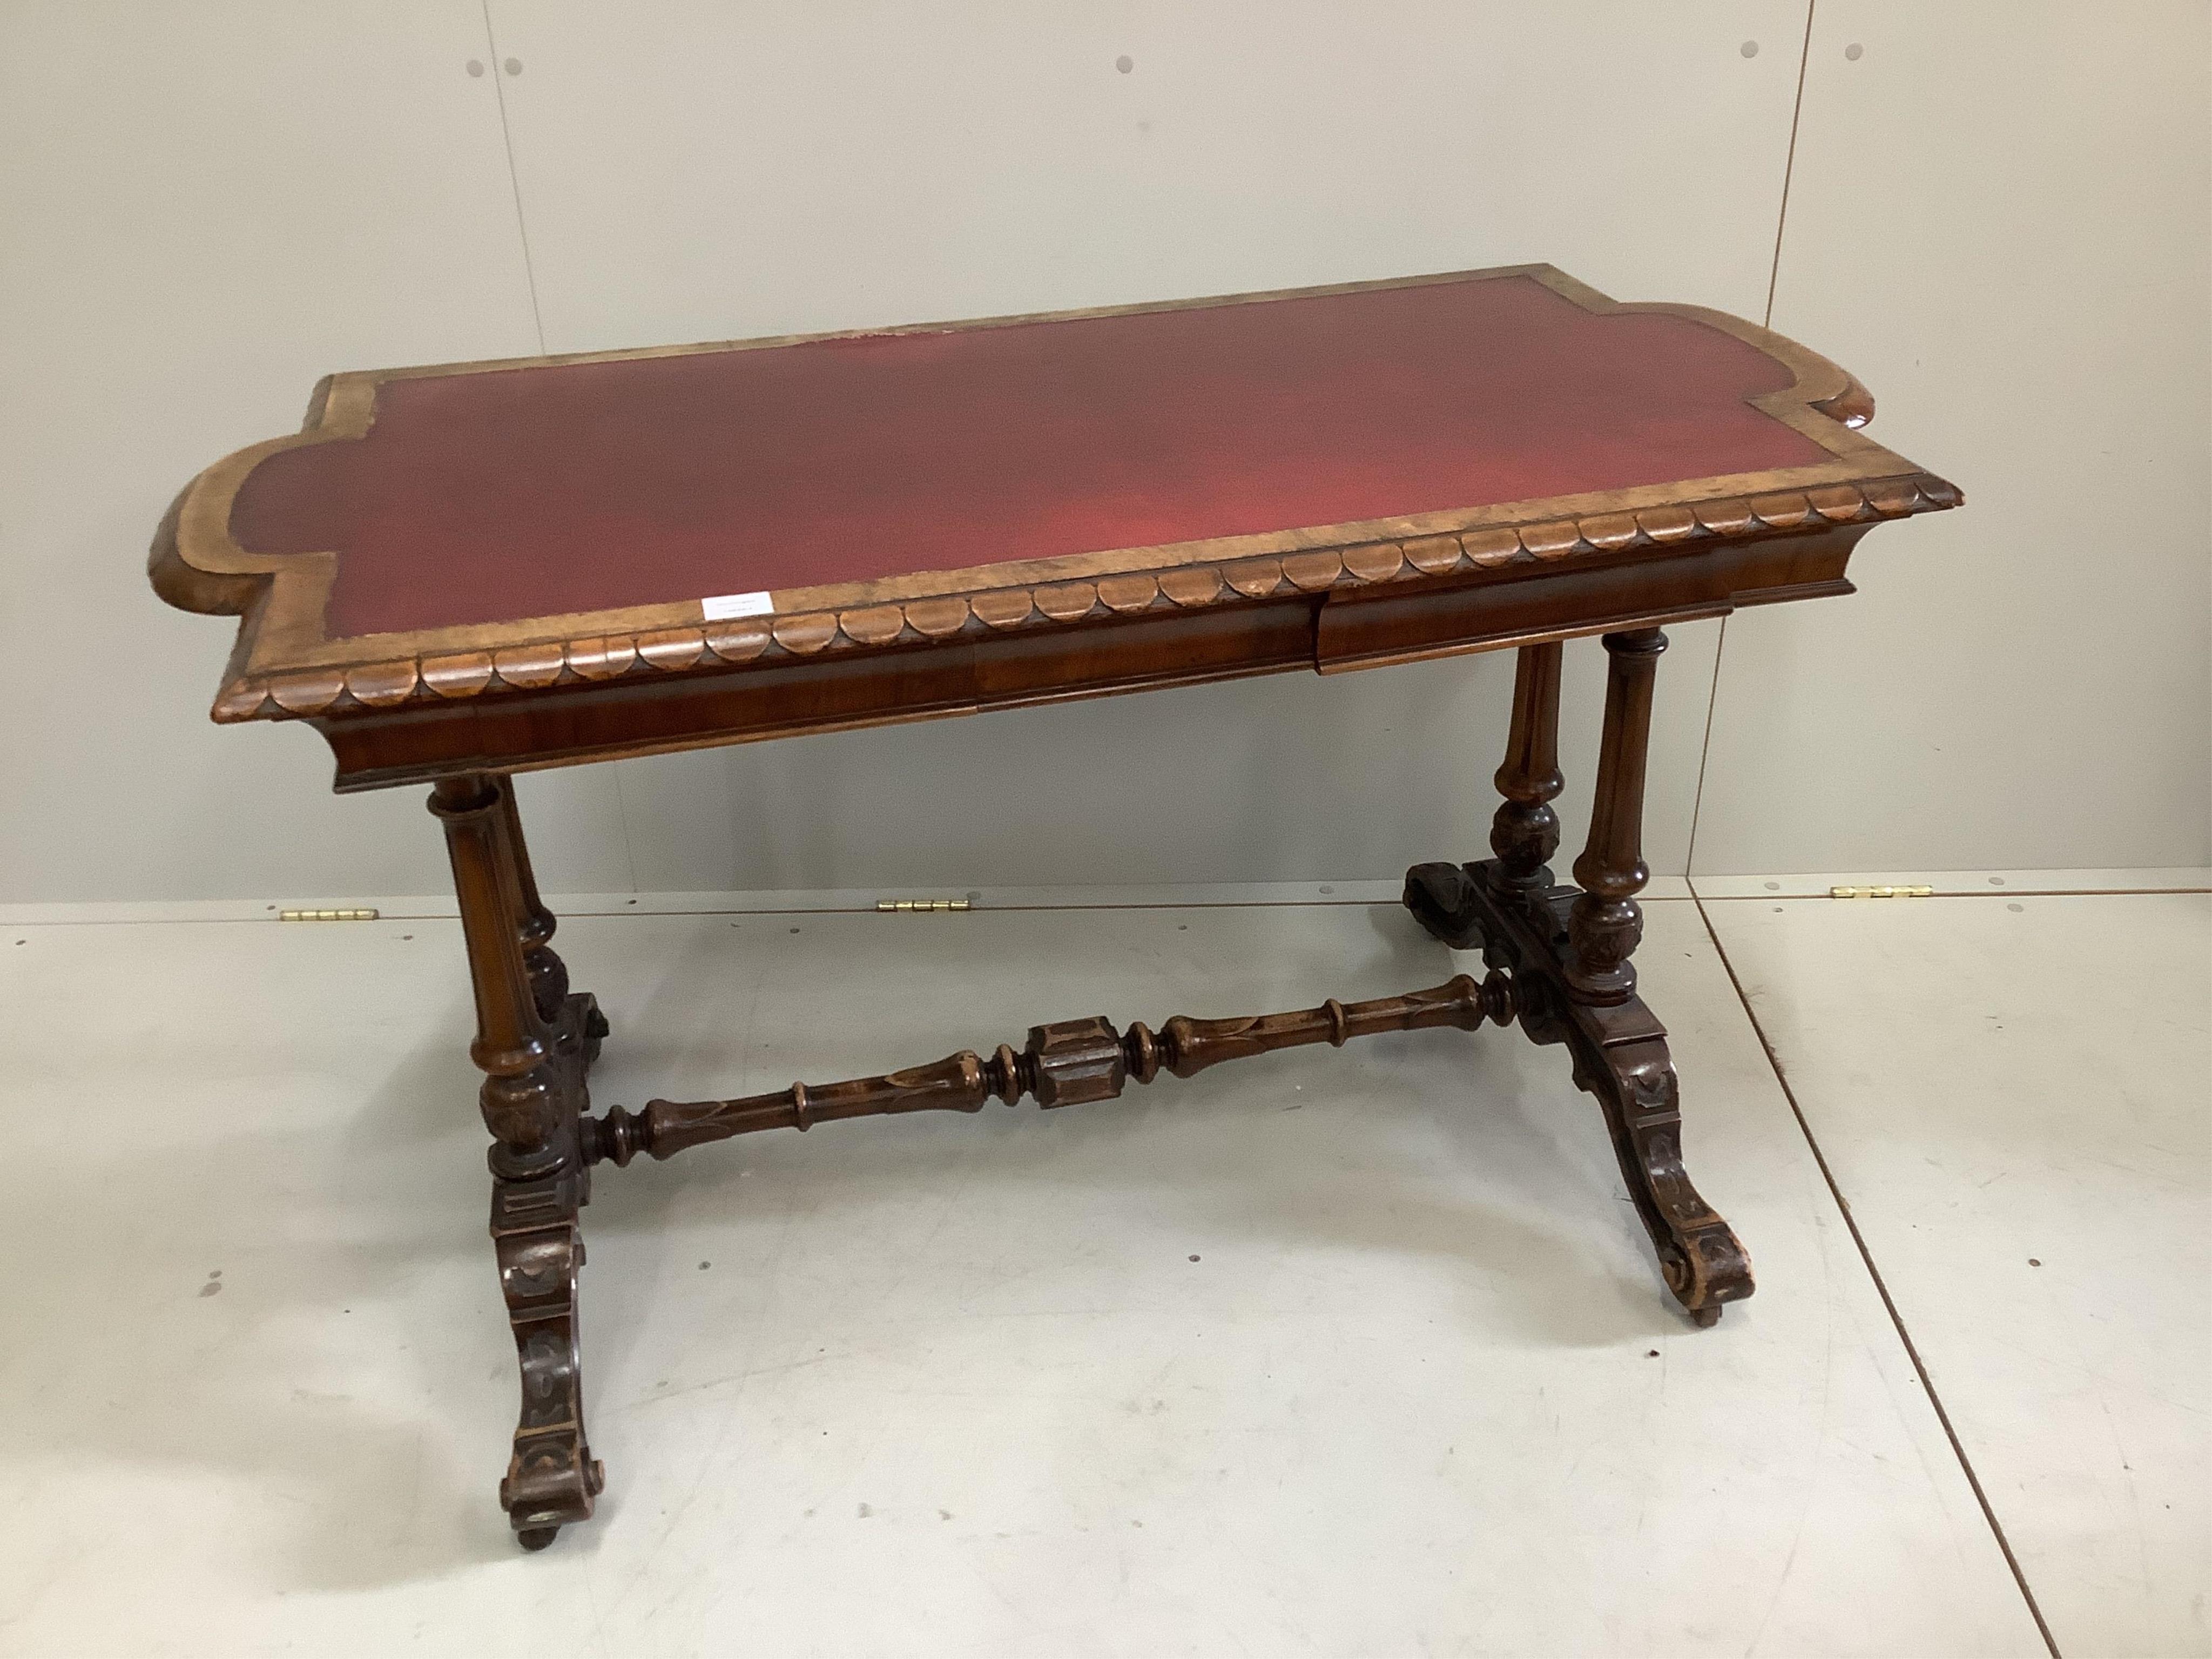 An early Victorian rectangular walnut writing table, width 126cm, depth 64cm, height 73cm. Condition - fair